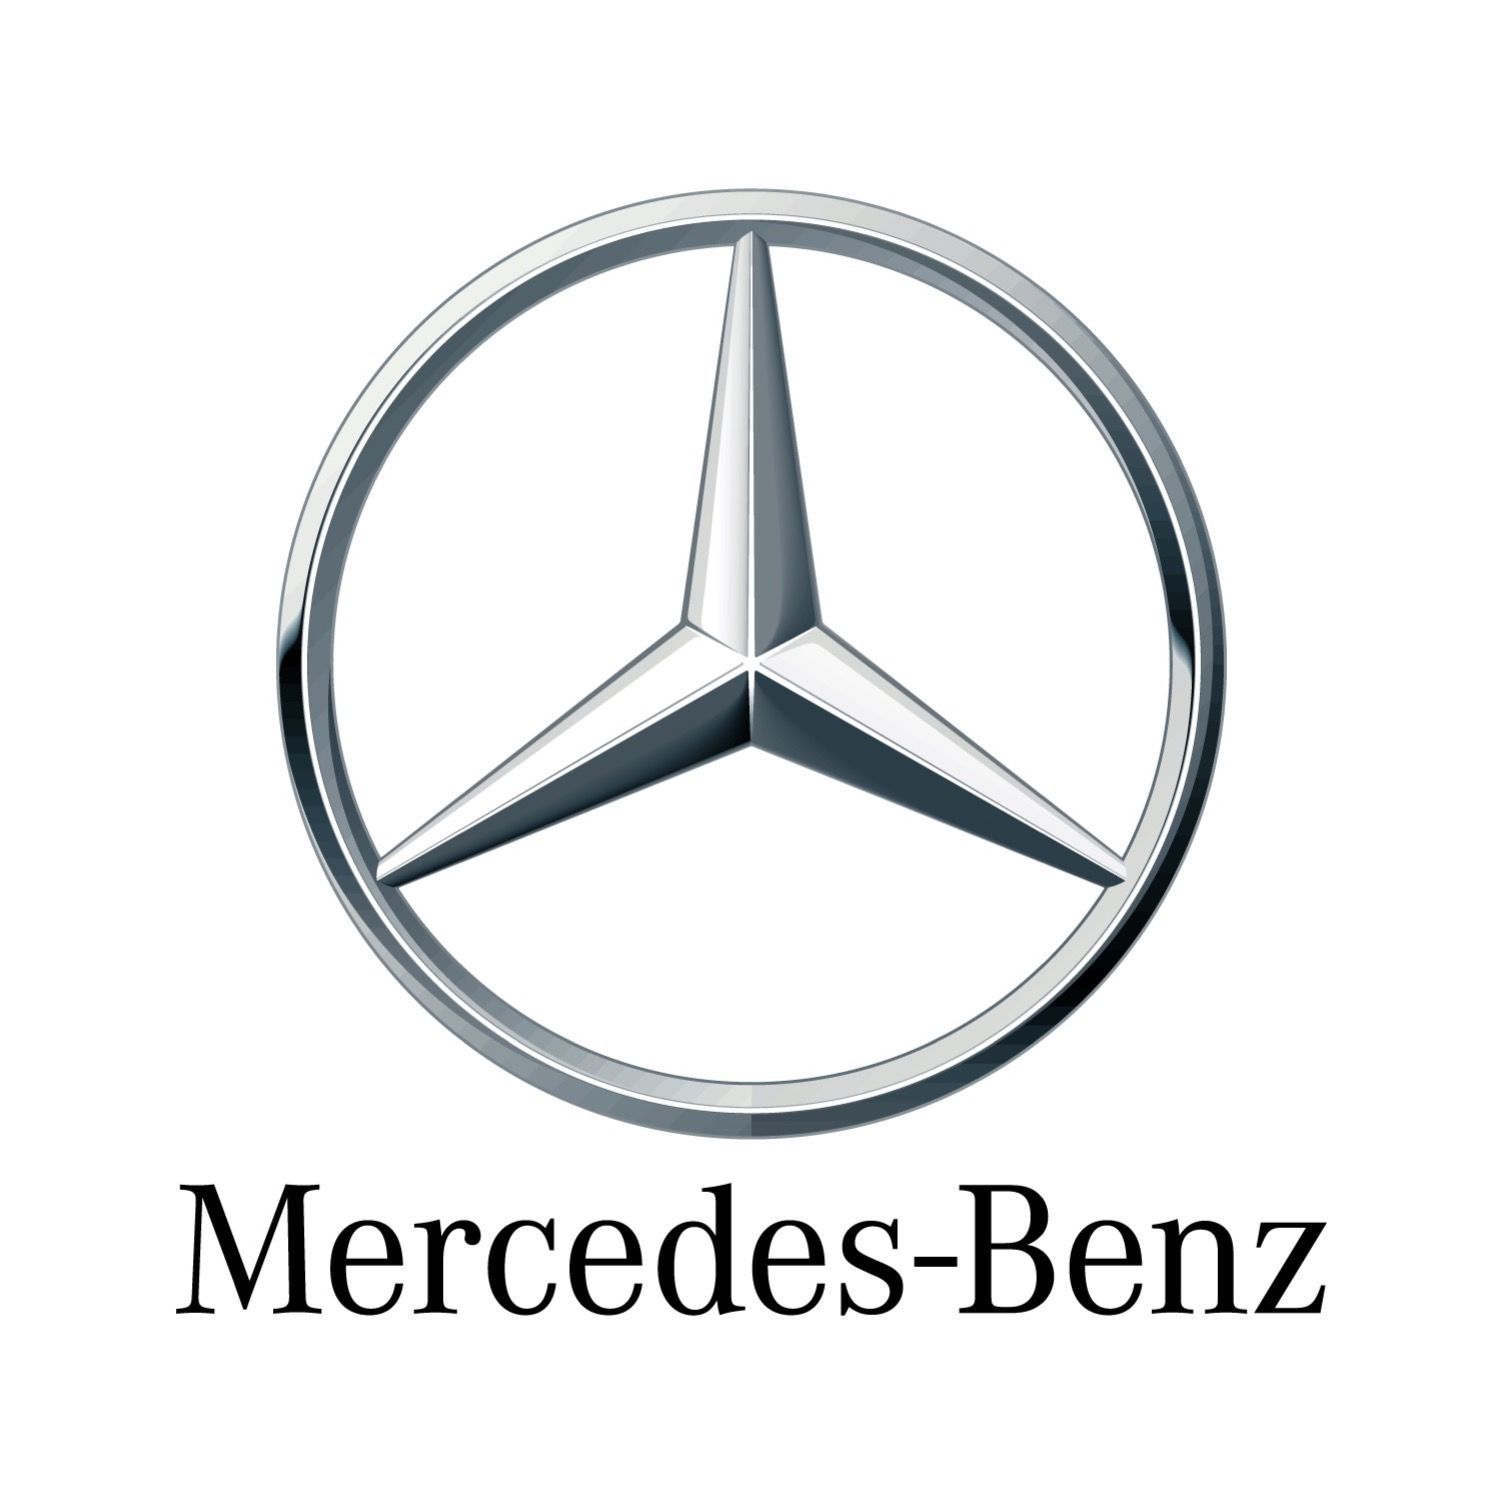 Mercedes-Benz GLC Coupe 2019